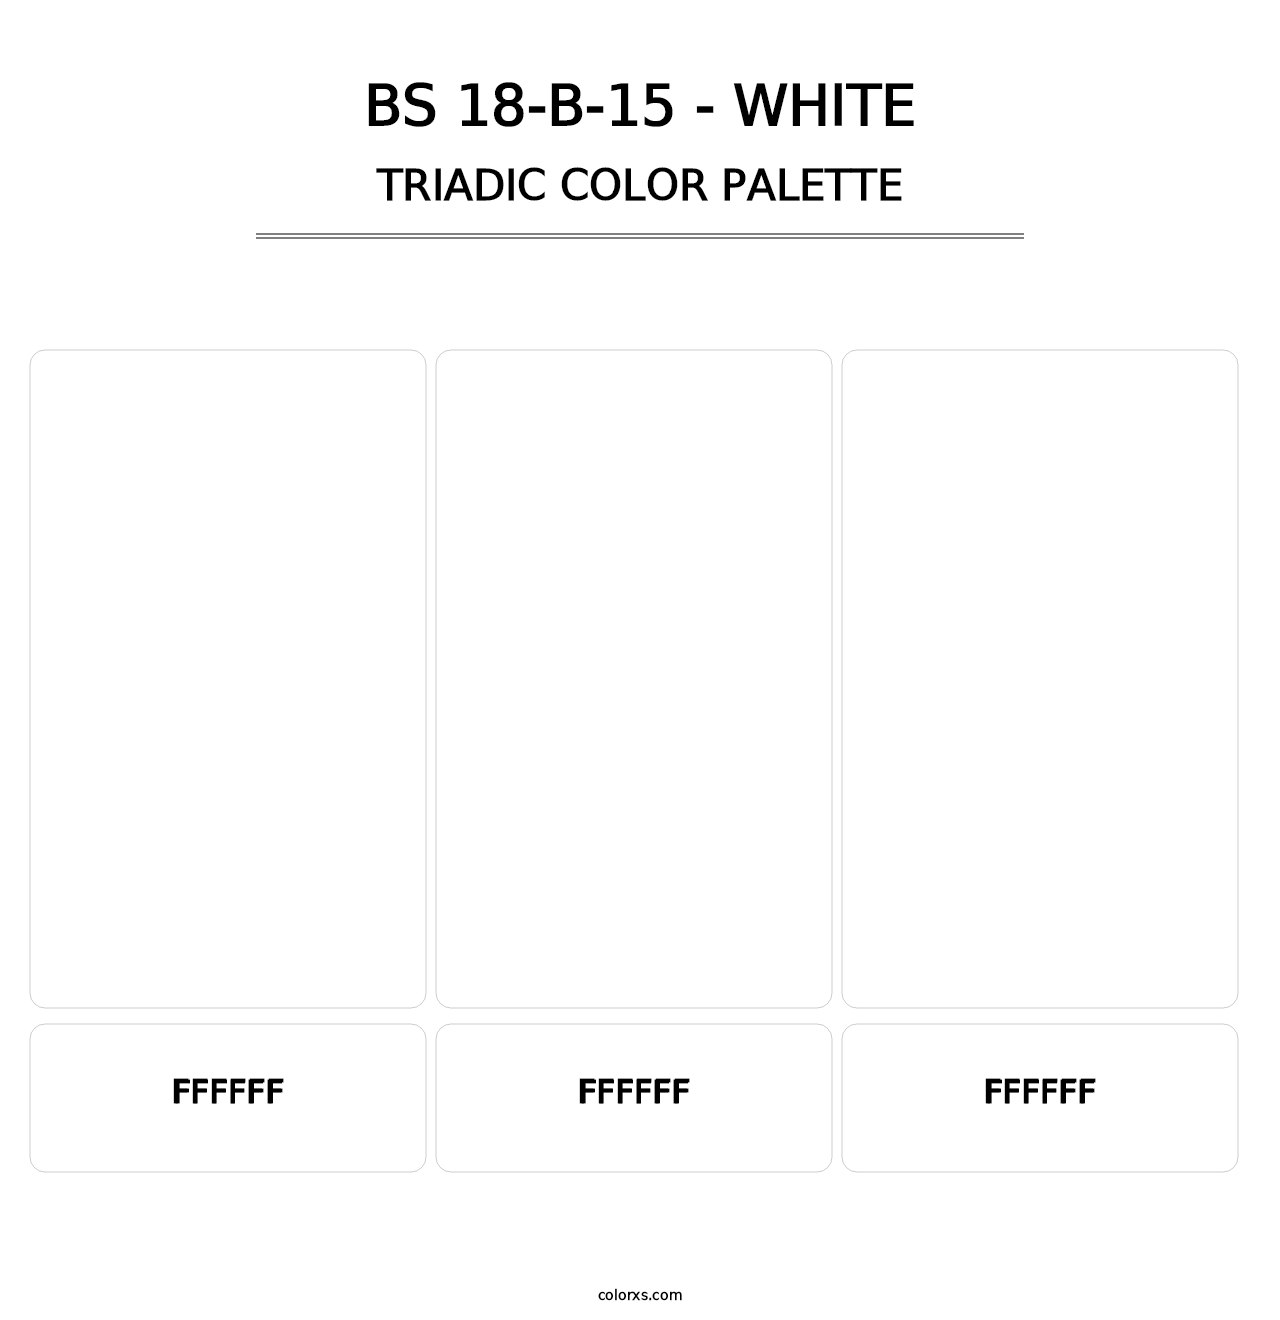 BS 18-B-15 - White - Triadic Color Palette